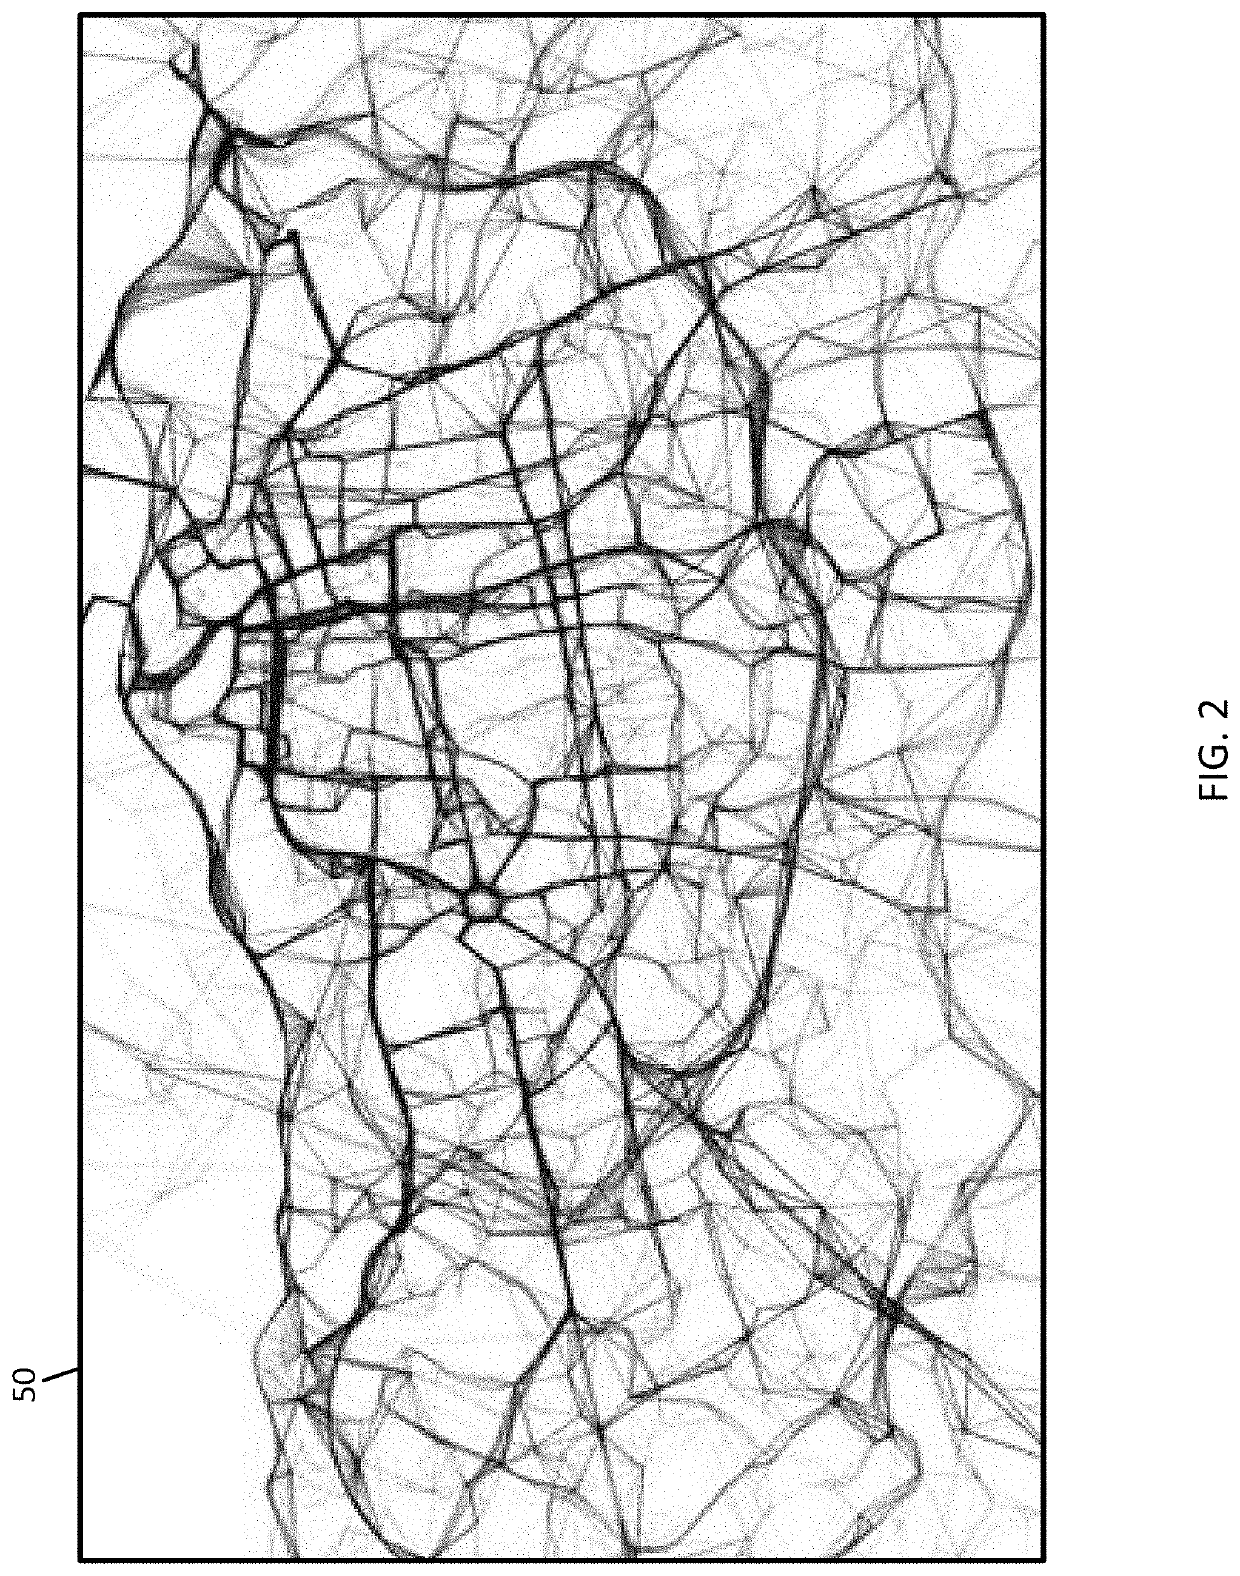 Triangulation for k-anonymity in location trajectory data